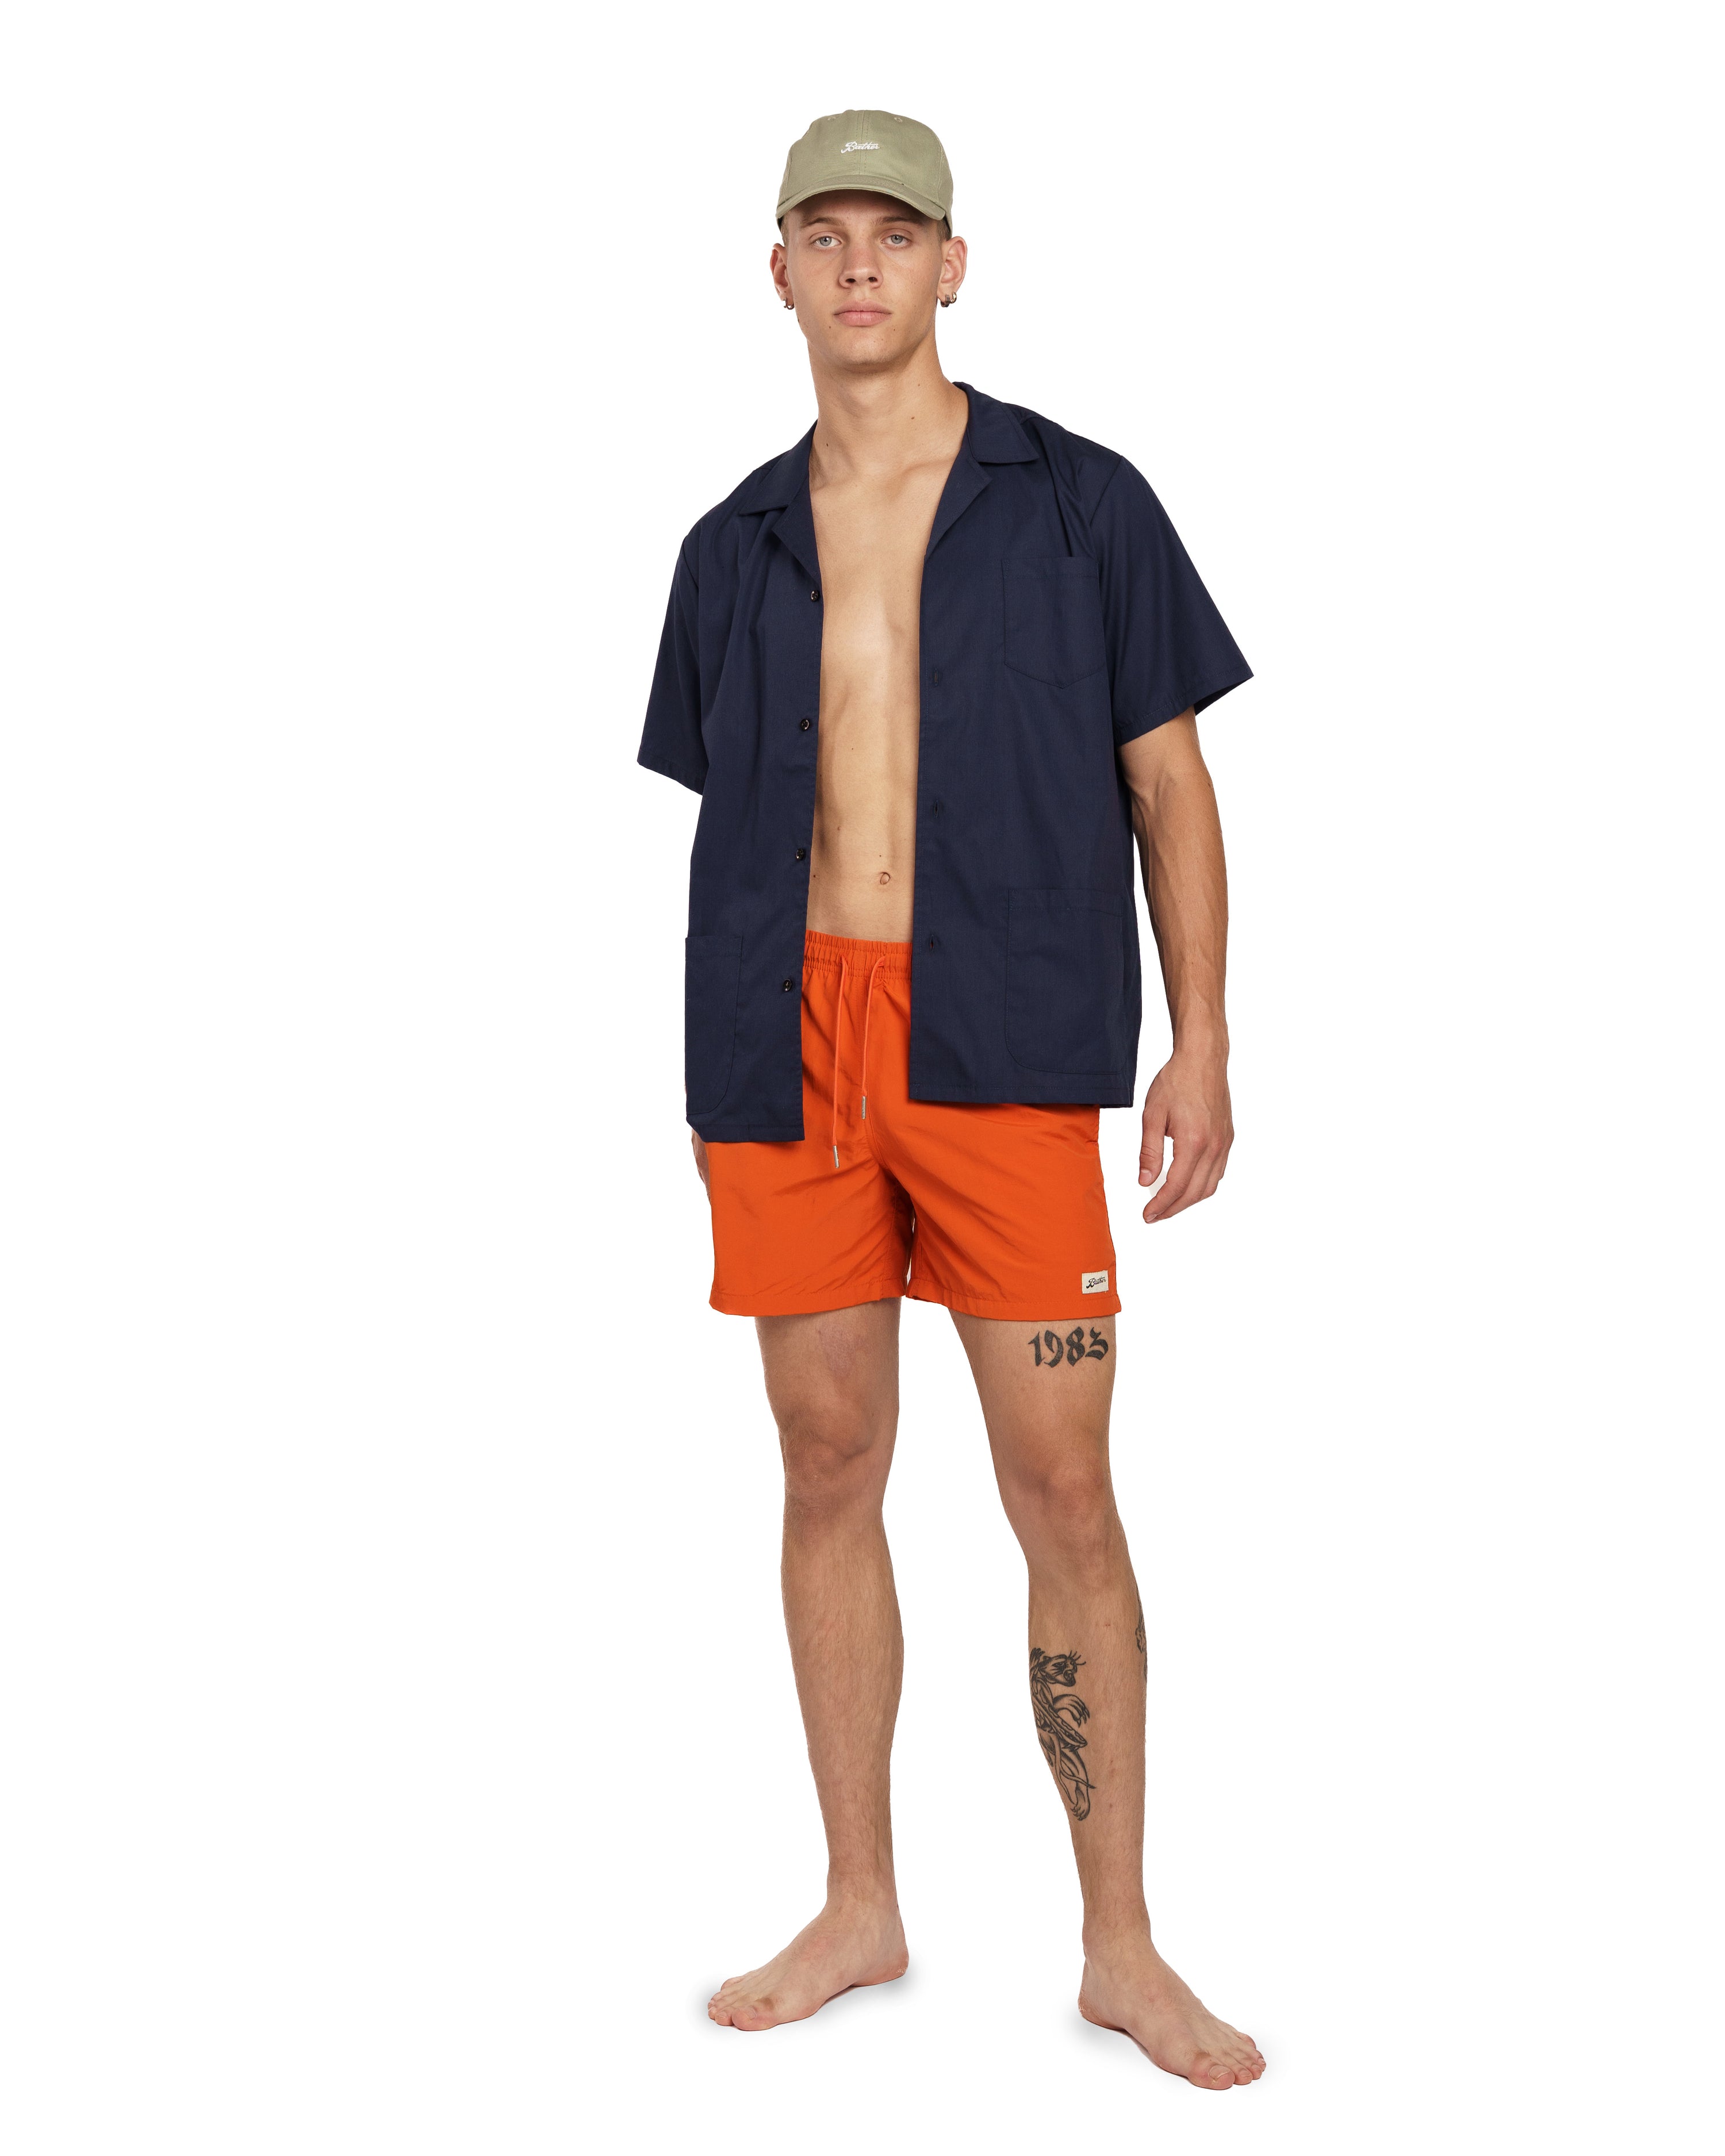 Solid Orange Swim Trunk on model